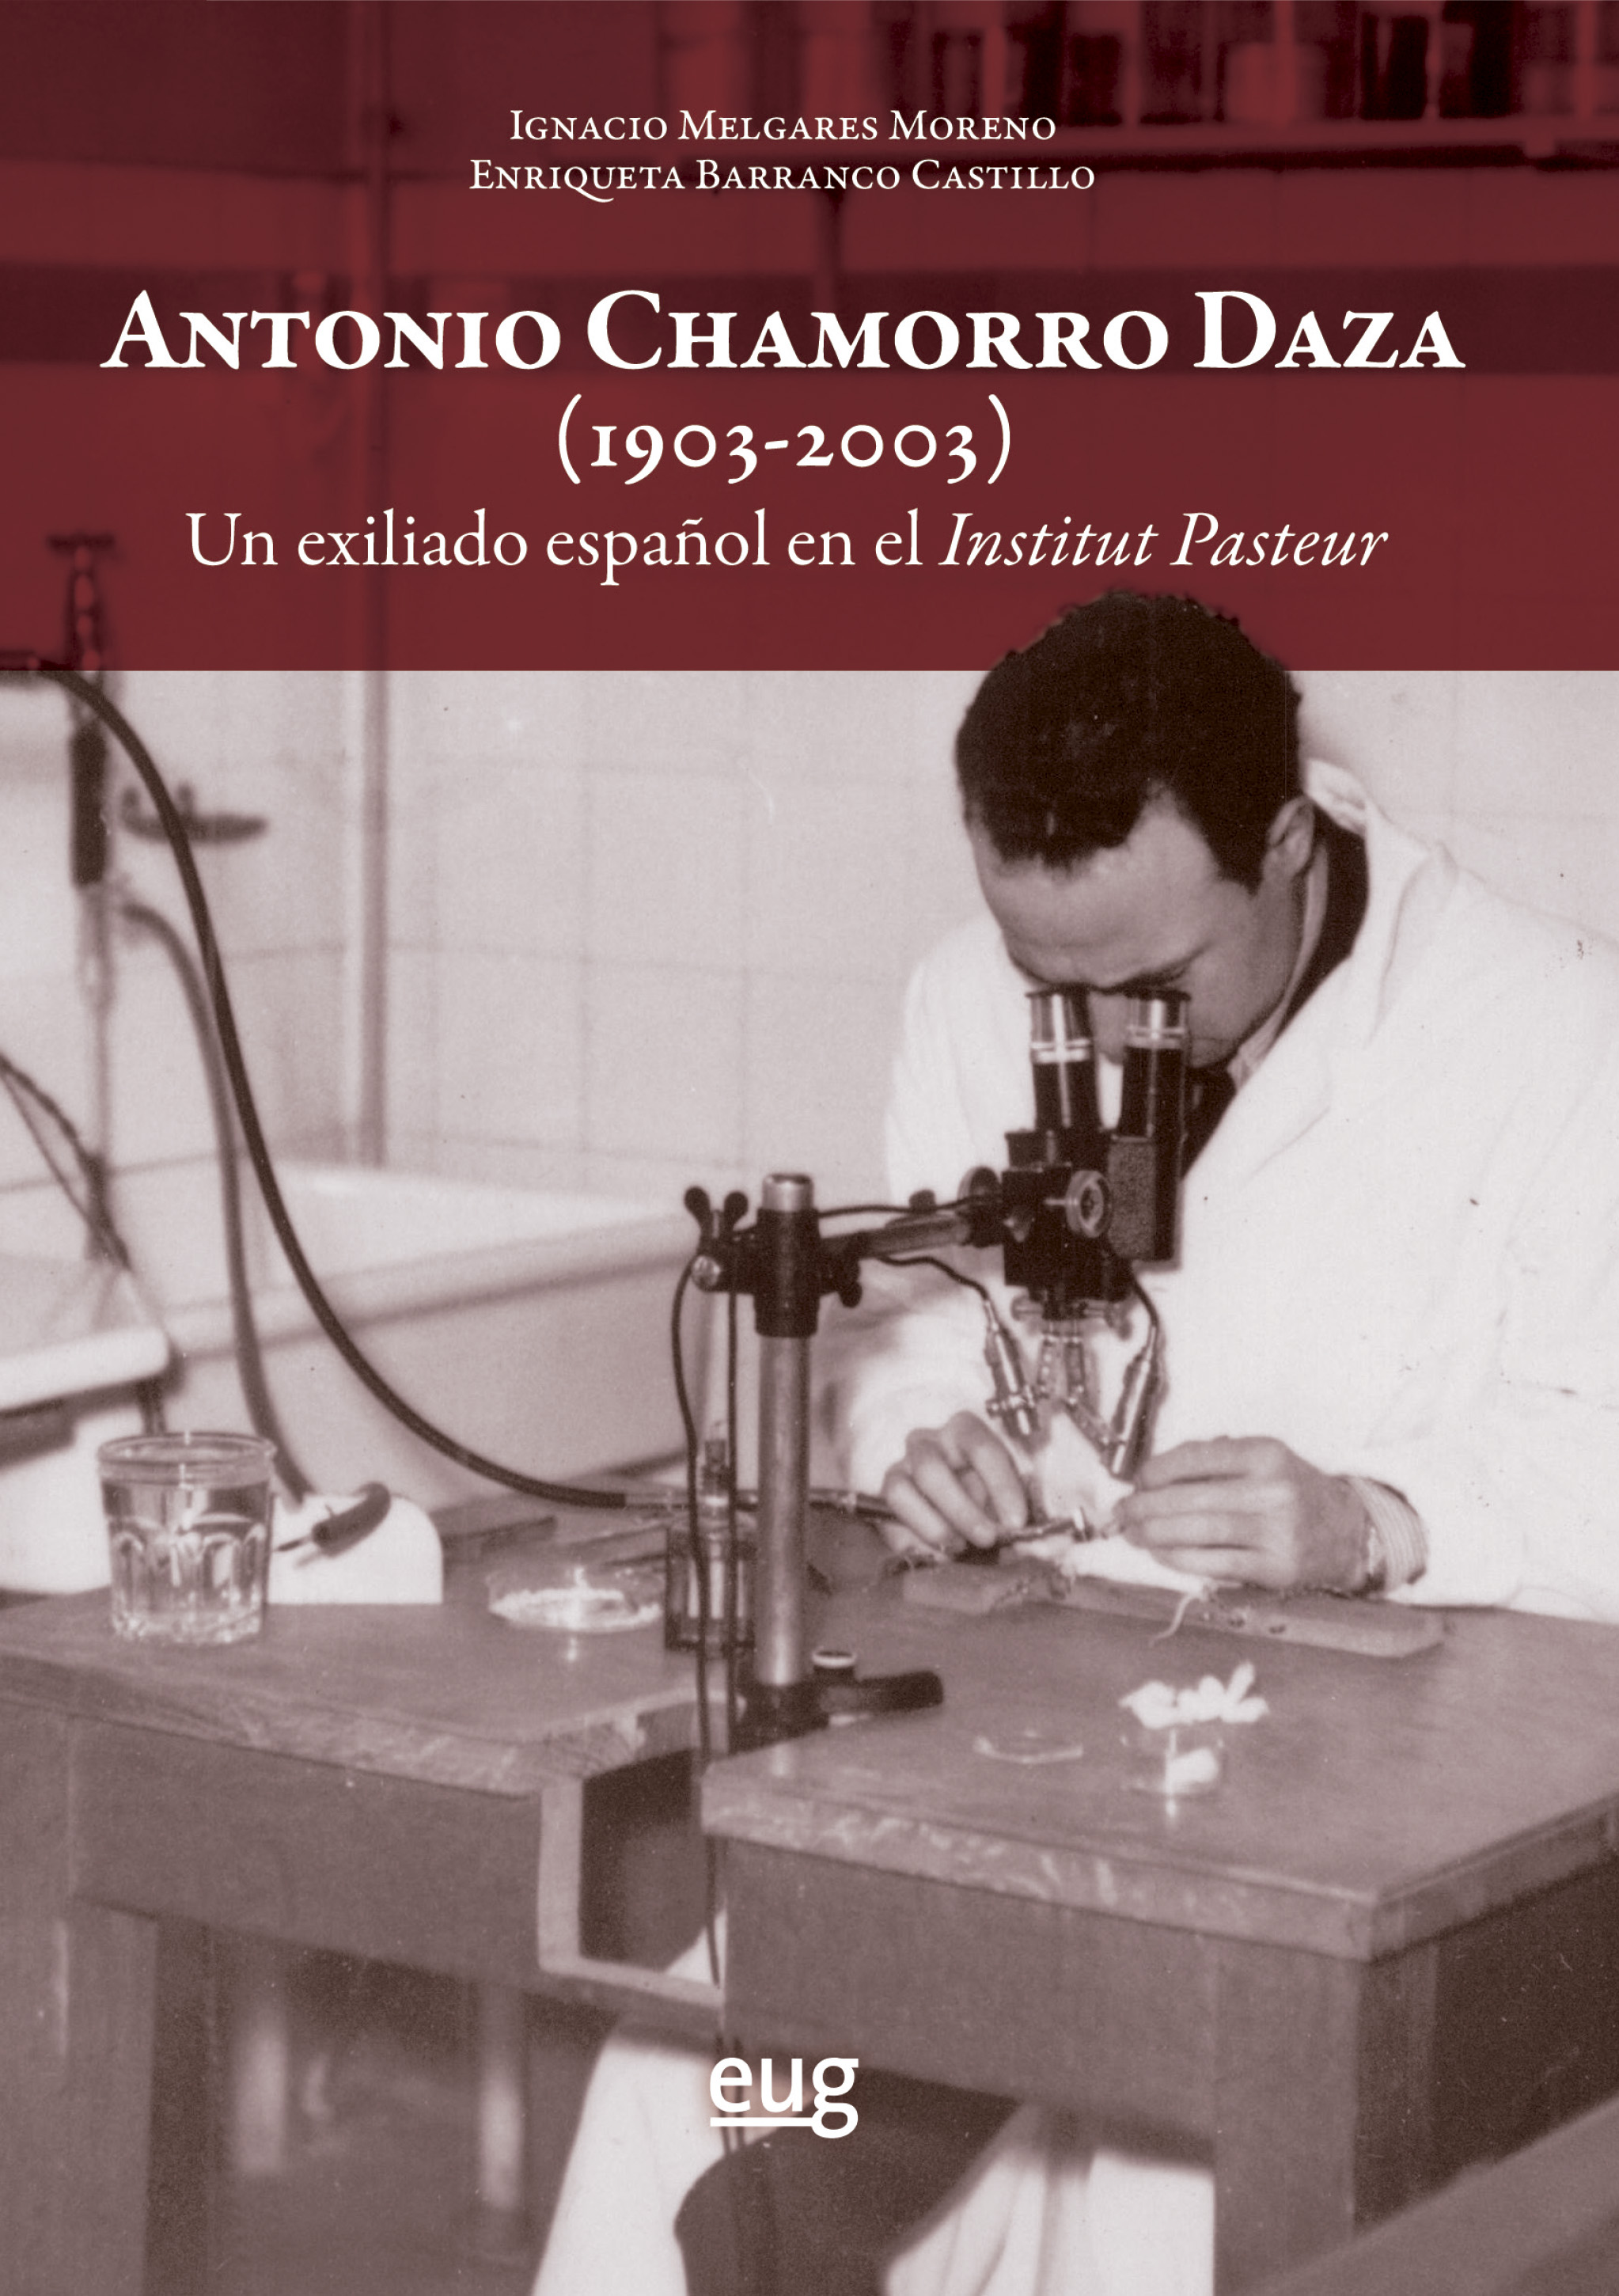 Antonio Chamorro Daza (1903-2003)